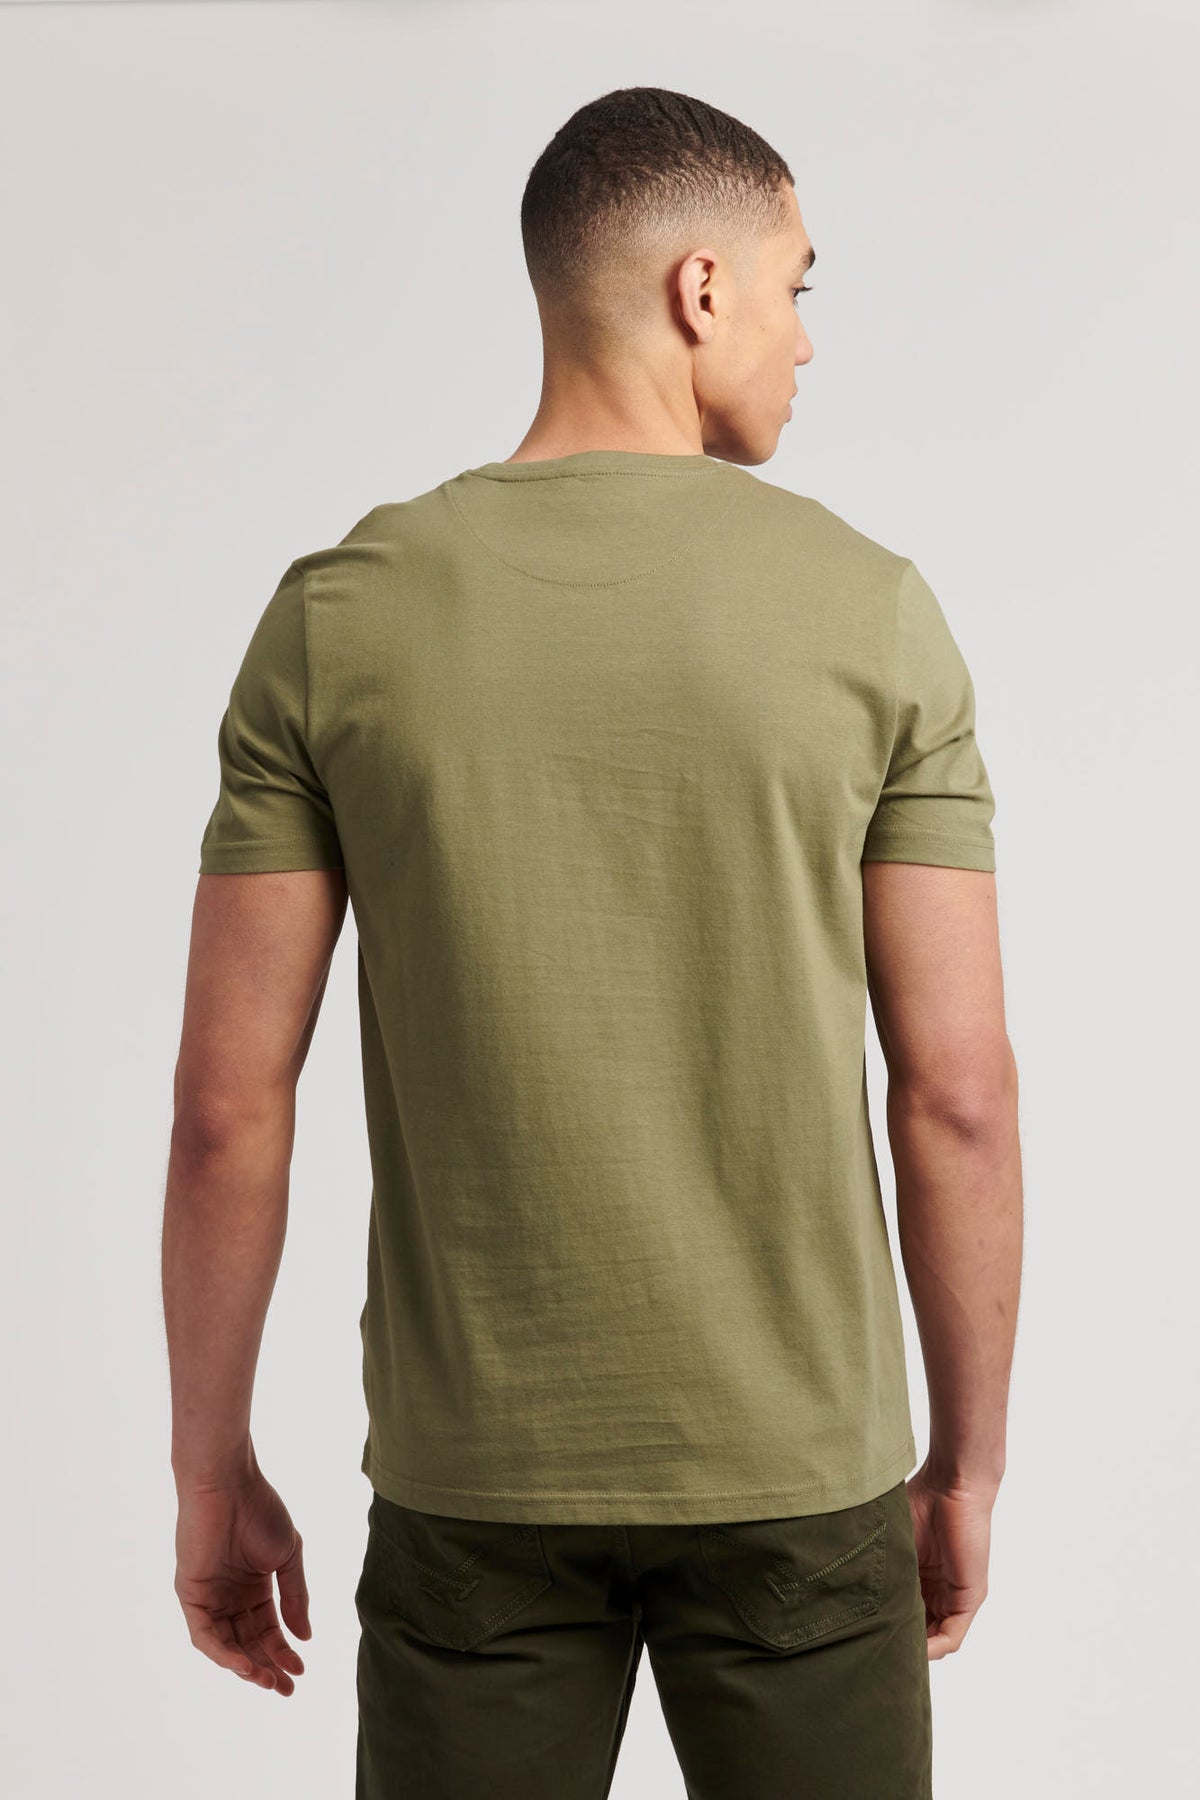 Mens Authentic USPA Graphic T-Shirt in Deep Lichen Green